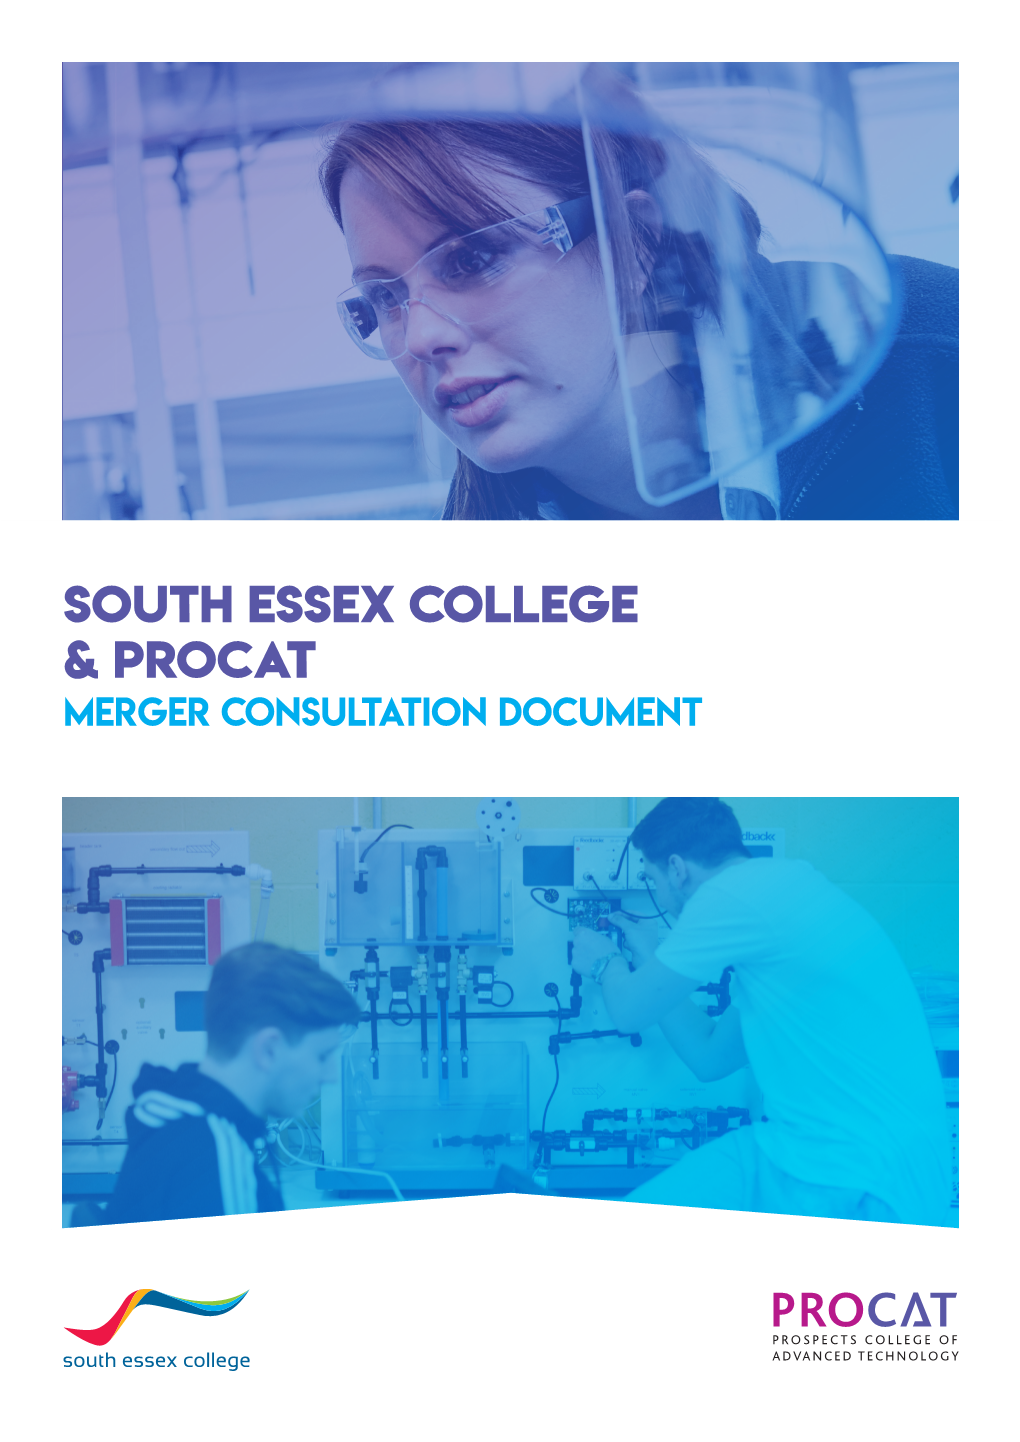 South Essex College & Procat